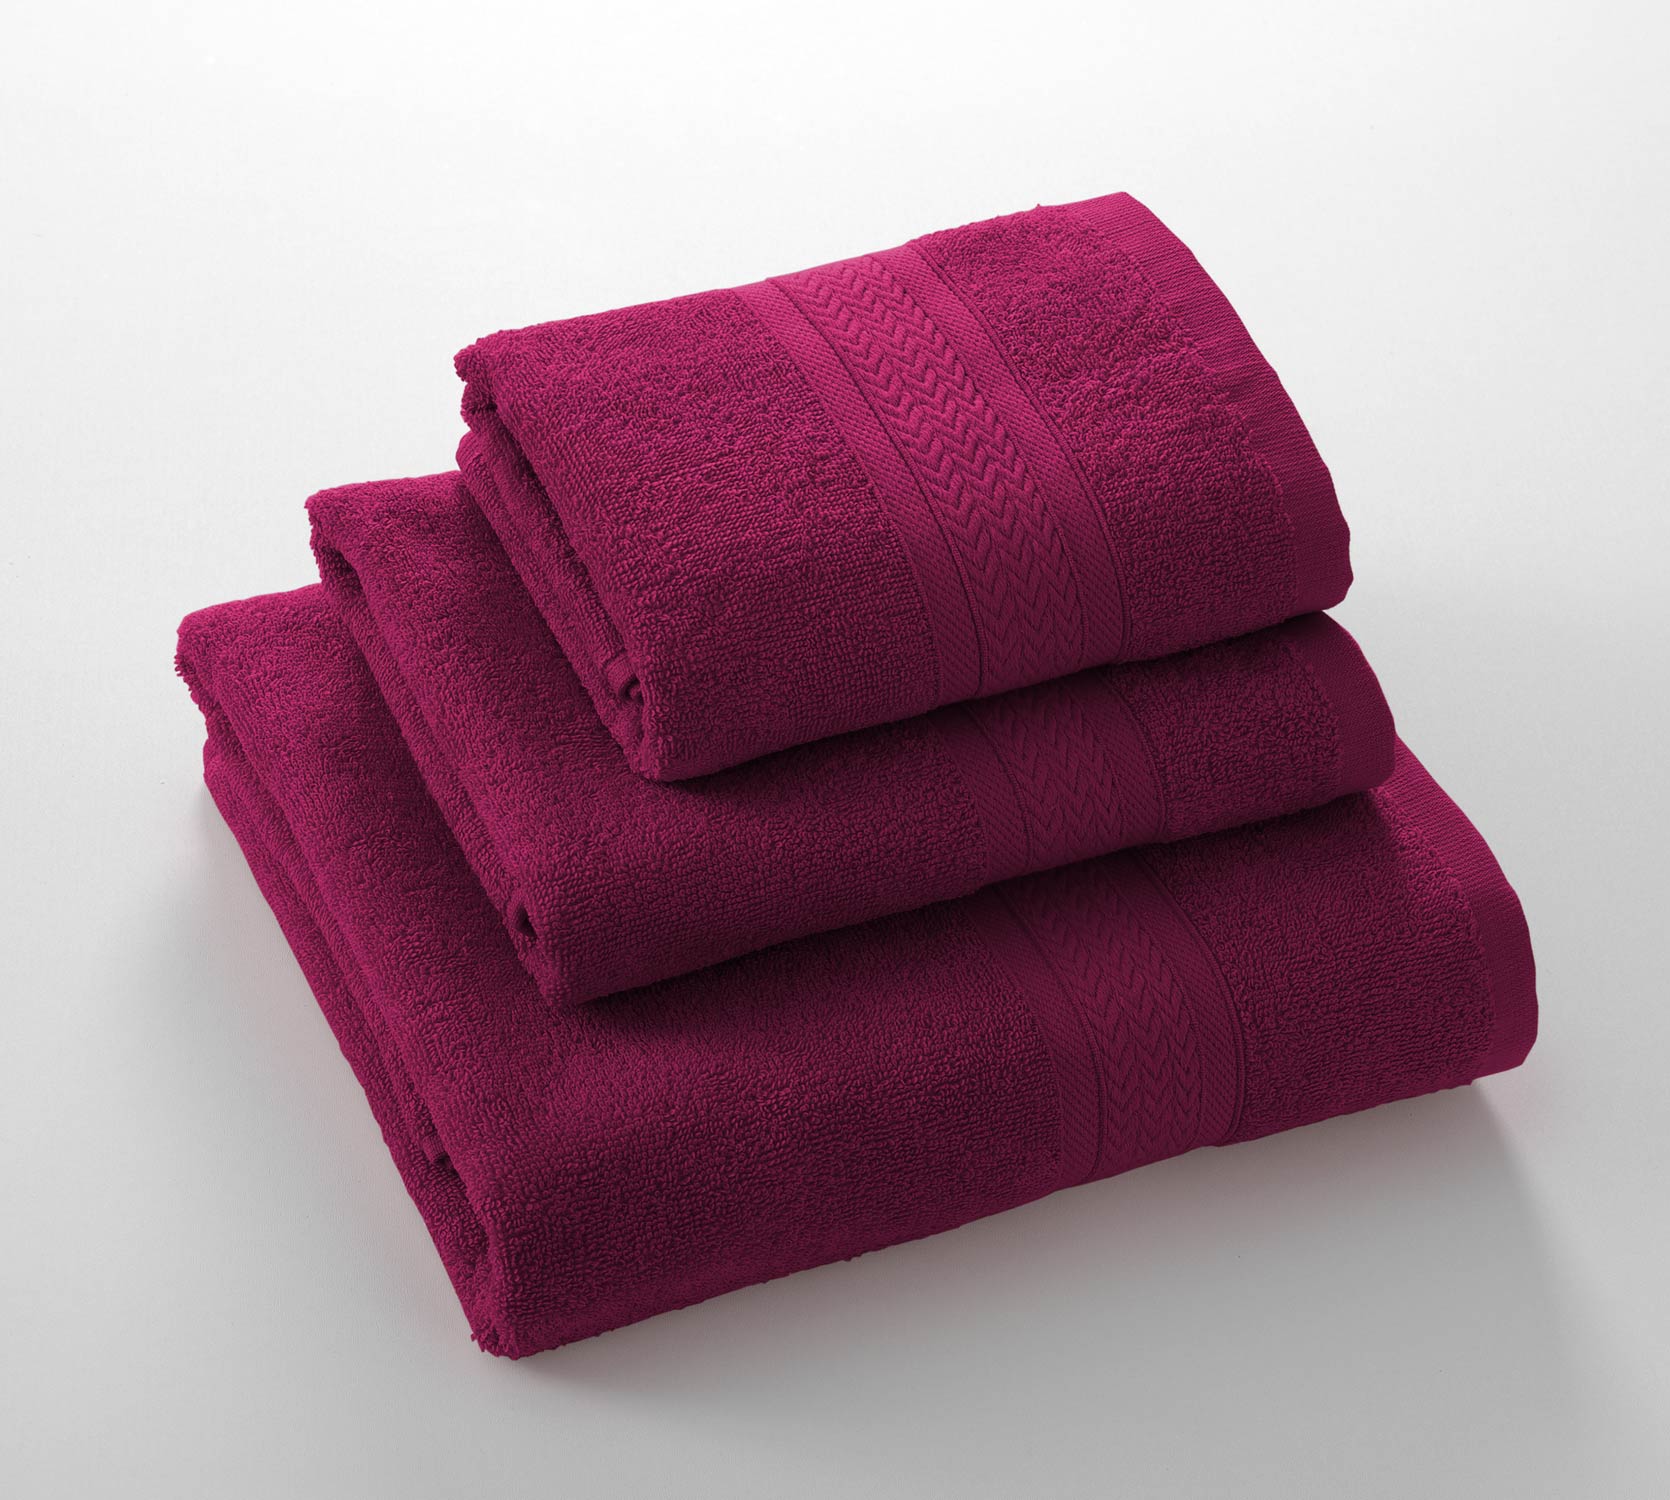 Полотенца утро. Полотенце лайф комфорт. Полотенце 40х70 бордовый. Розовое полотенце. Махровые изделия.